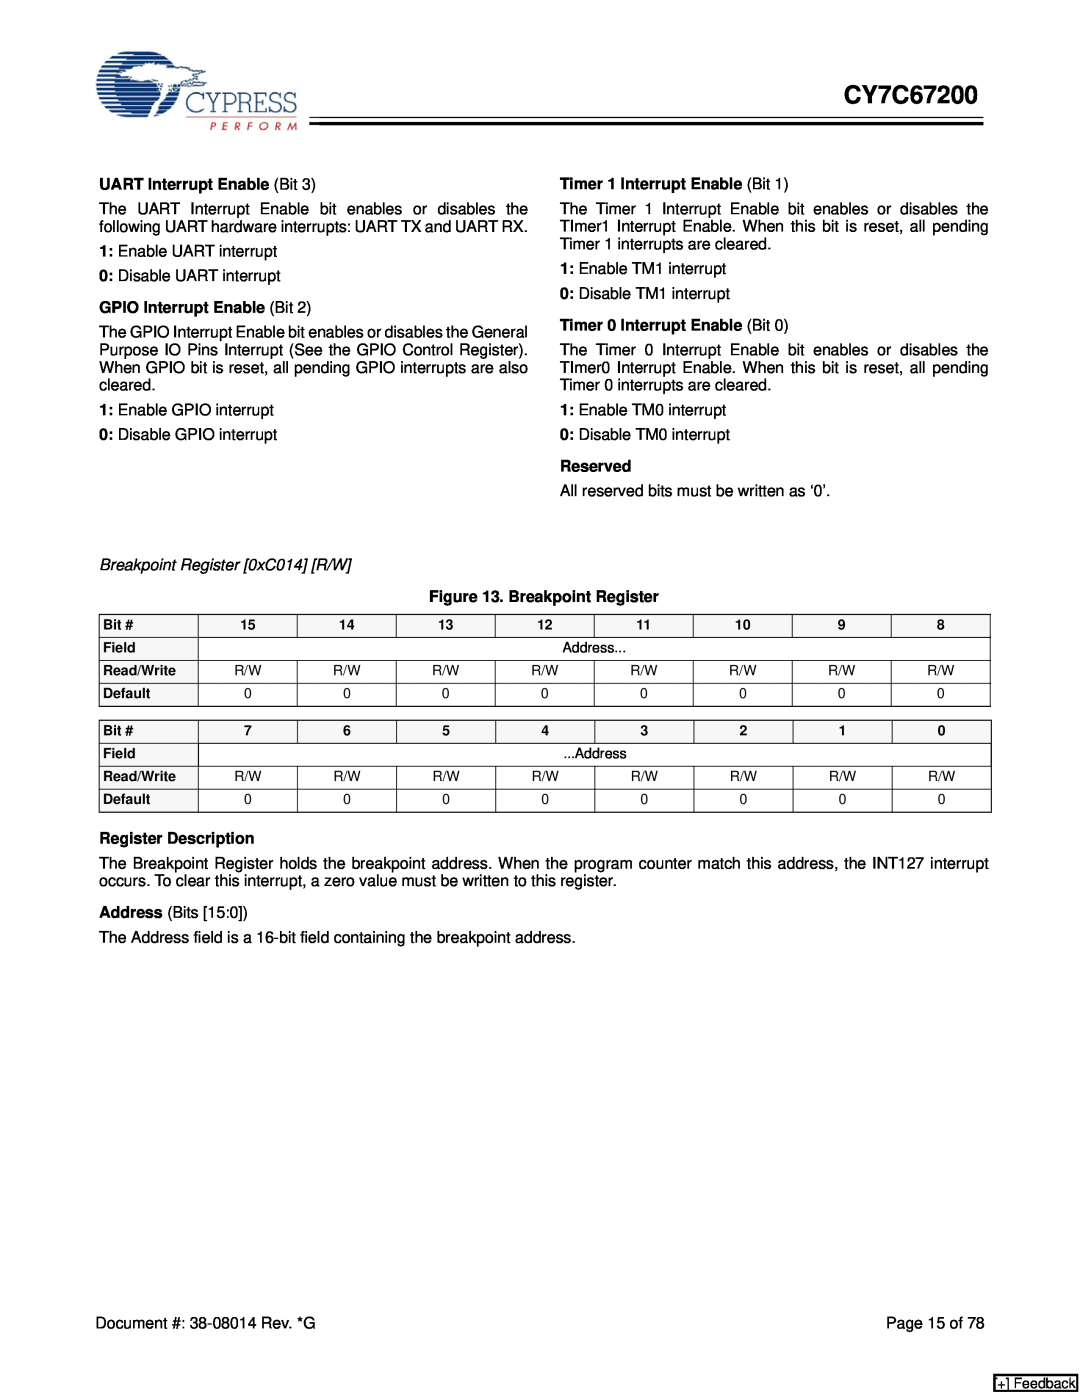 Cypress CY7C67200 manual Breakpoint Register 0xC014 R/W 